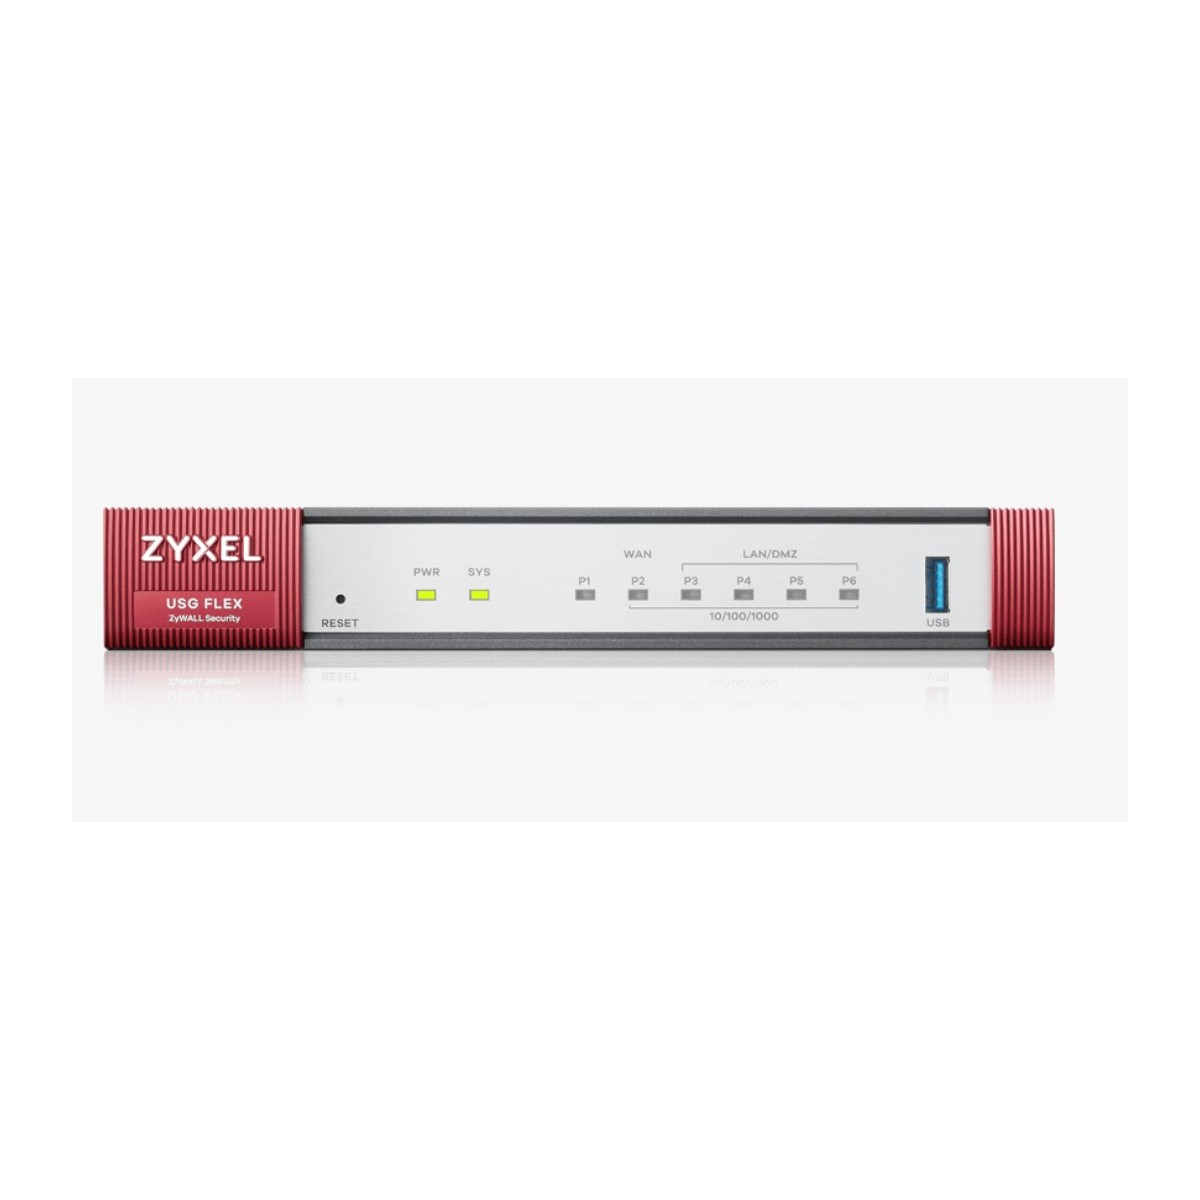 ZyXEL USG Flex 100 hardware firewall 900 Mbit-s